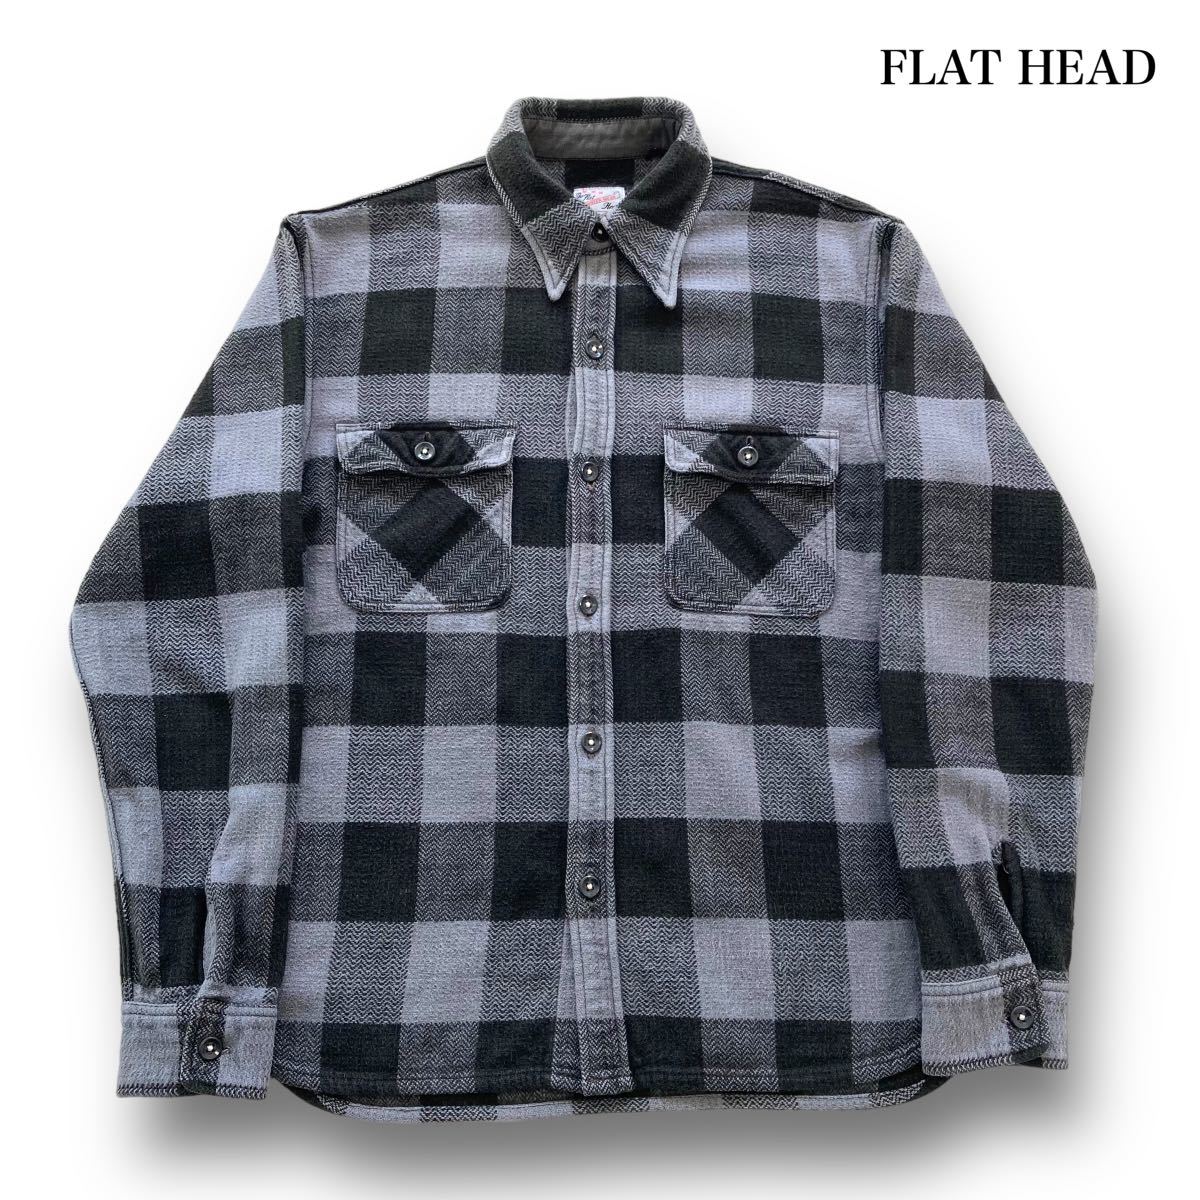 【FLAT HEAD】フラットヘッド バッファローチェックシャツ チンスト 古着 ネルシャツ チェックシャツ ワークシャツ グレーブラック 灰黒 _画像1